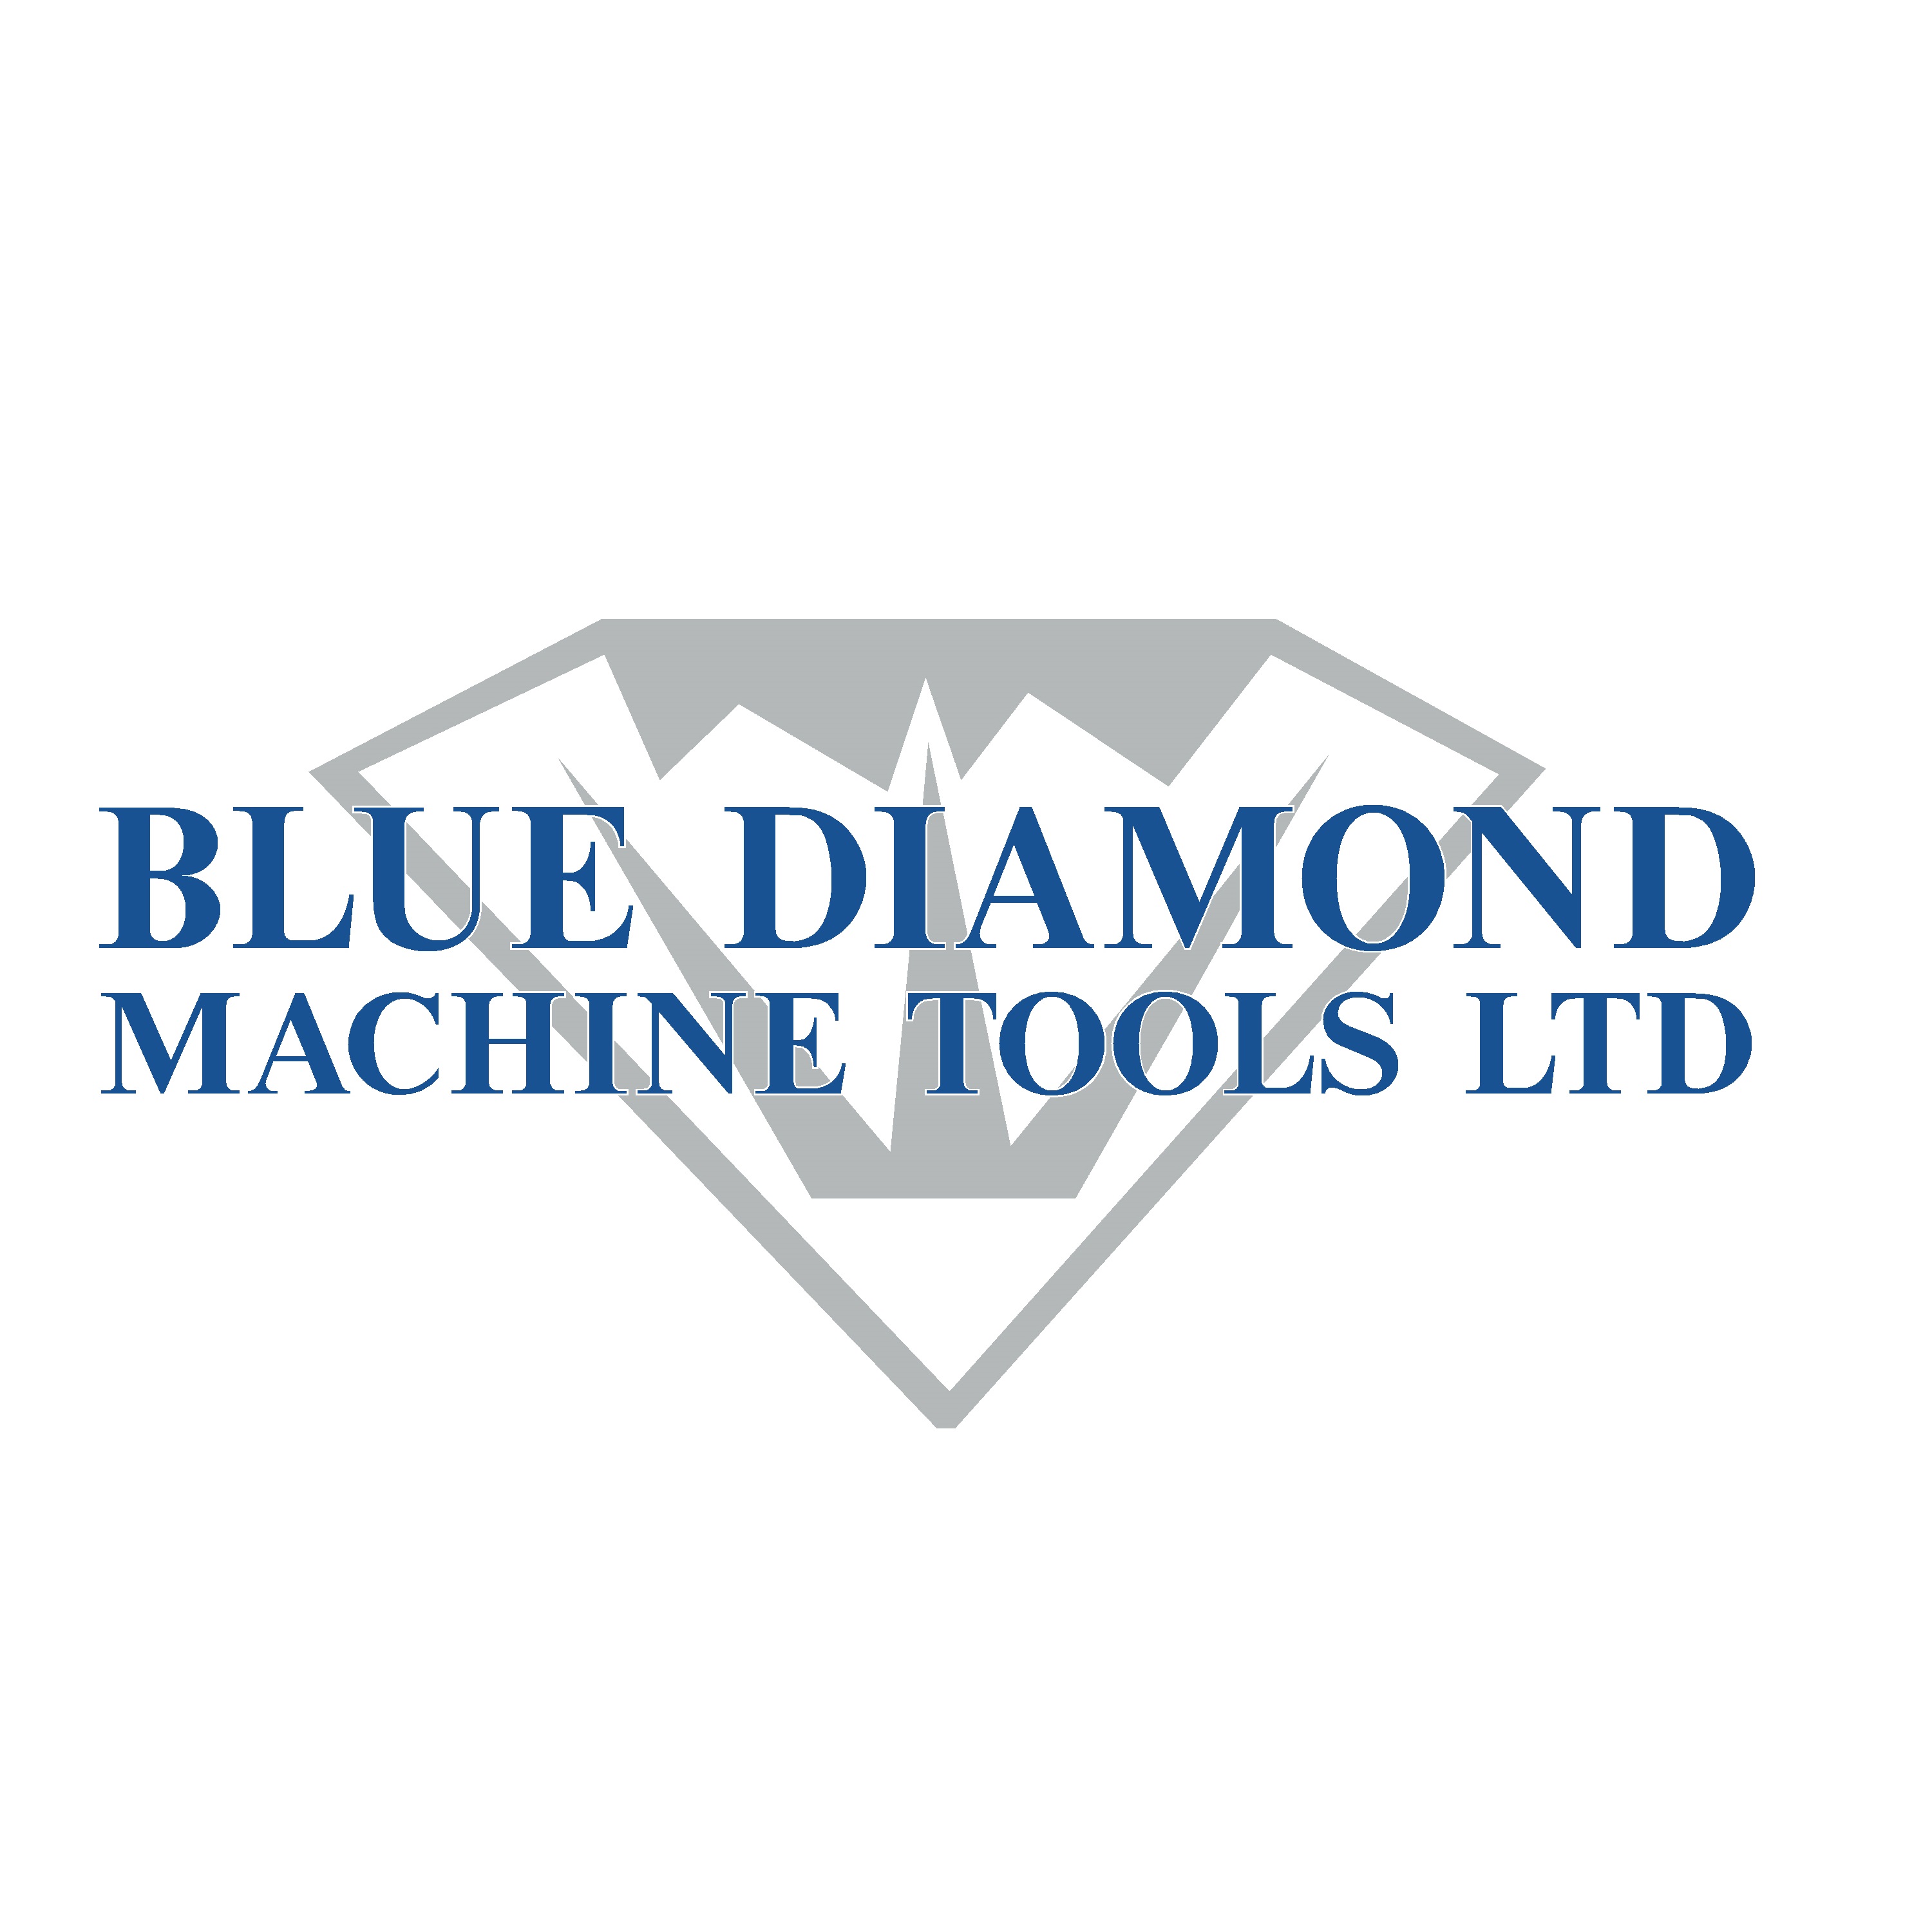 Blue Diamond Machine Tools Ltd